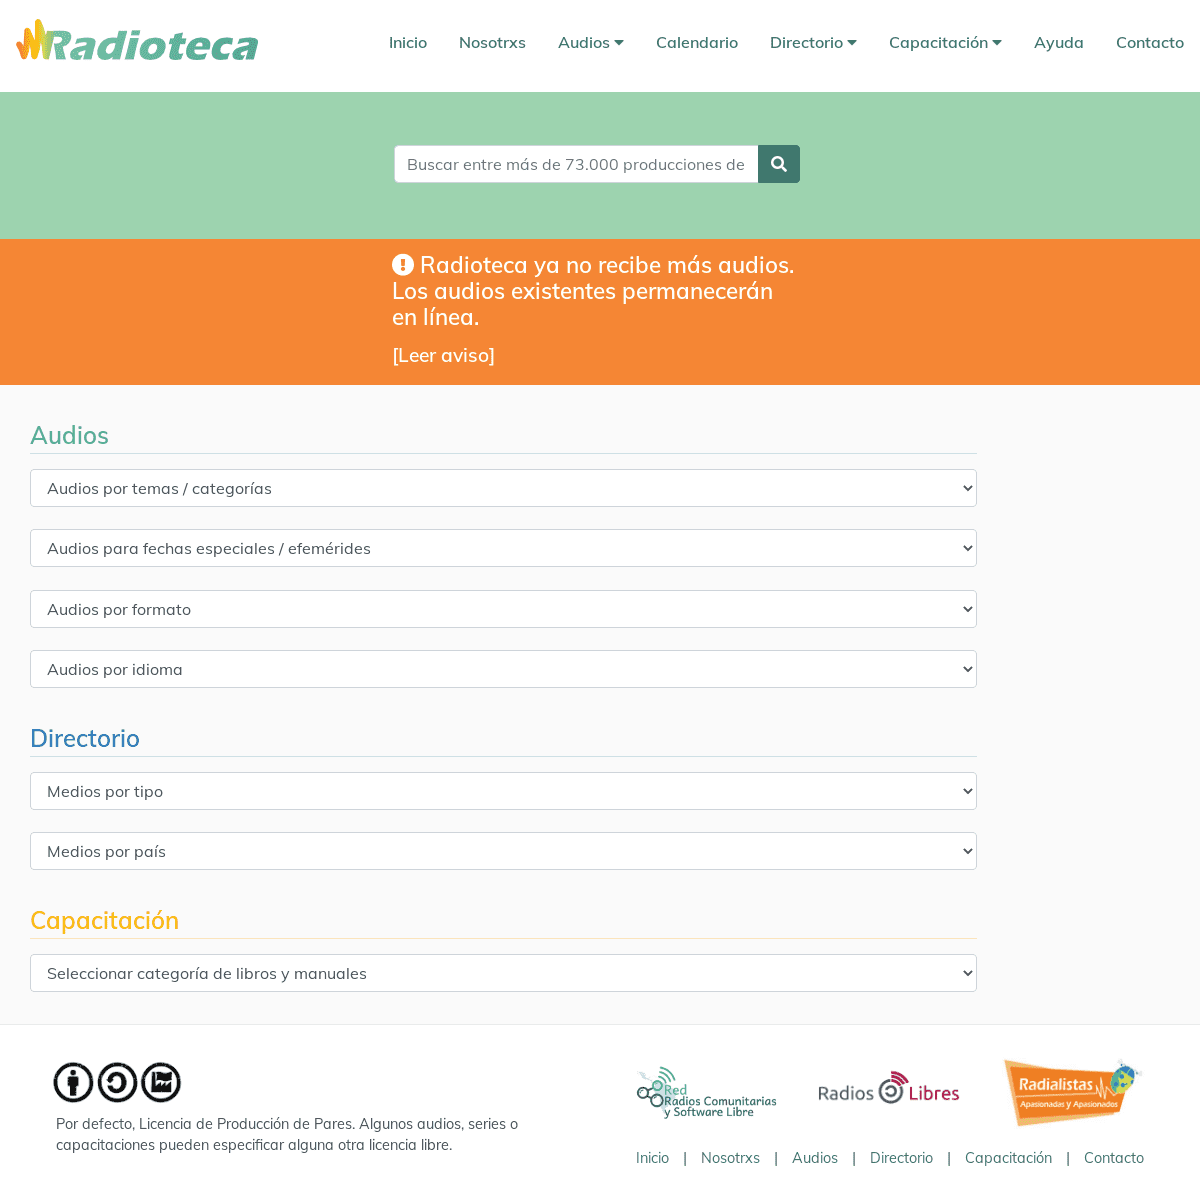 A complete backup of https://radioteca.net